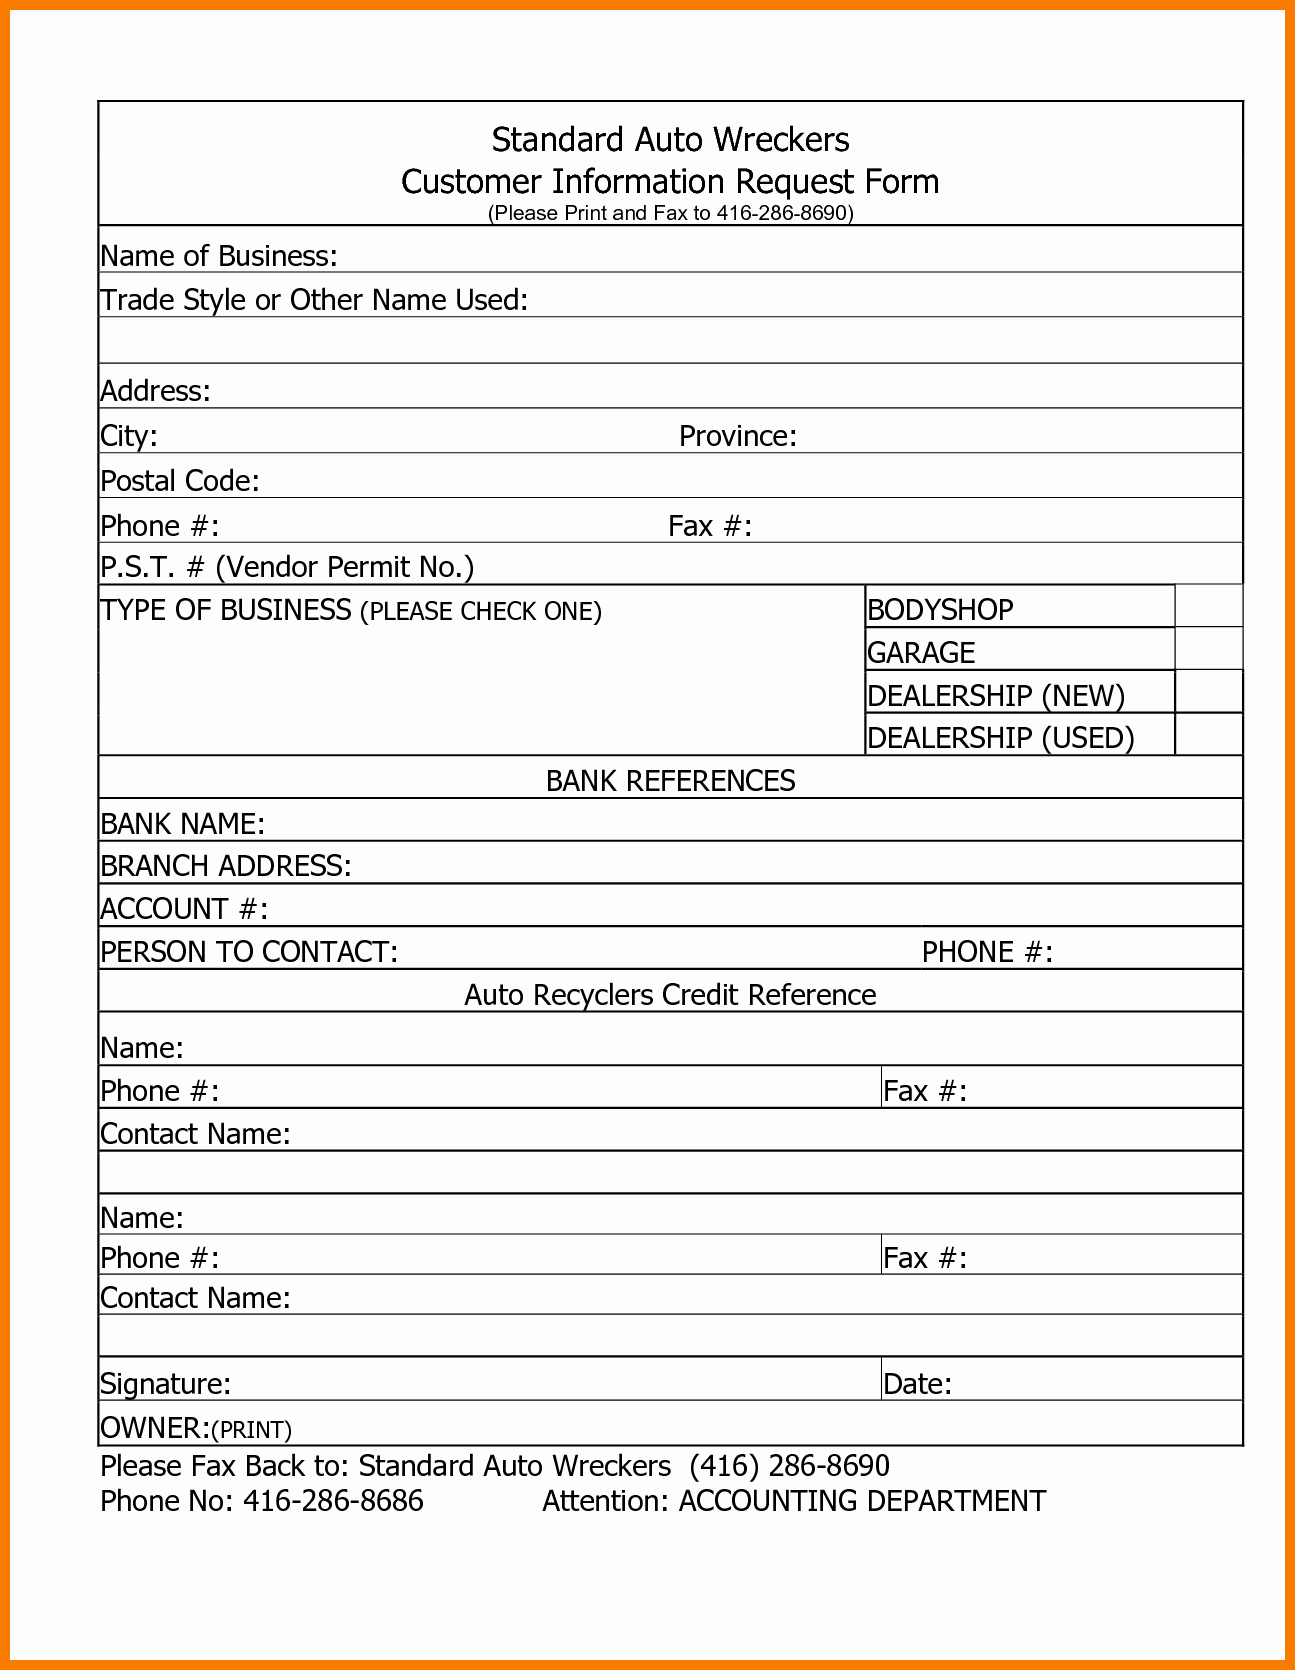 Customer Information form Template